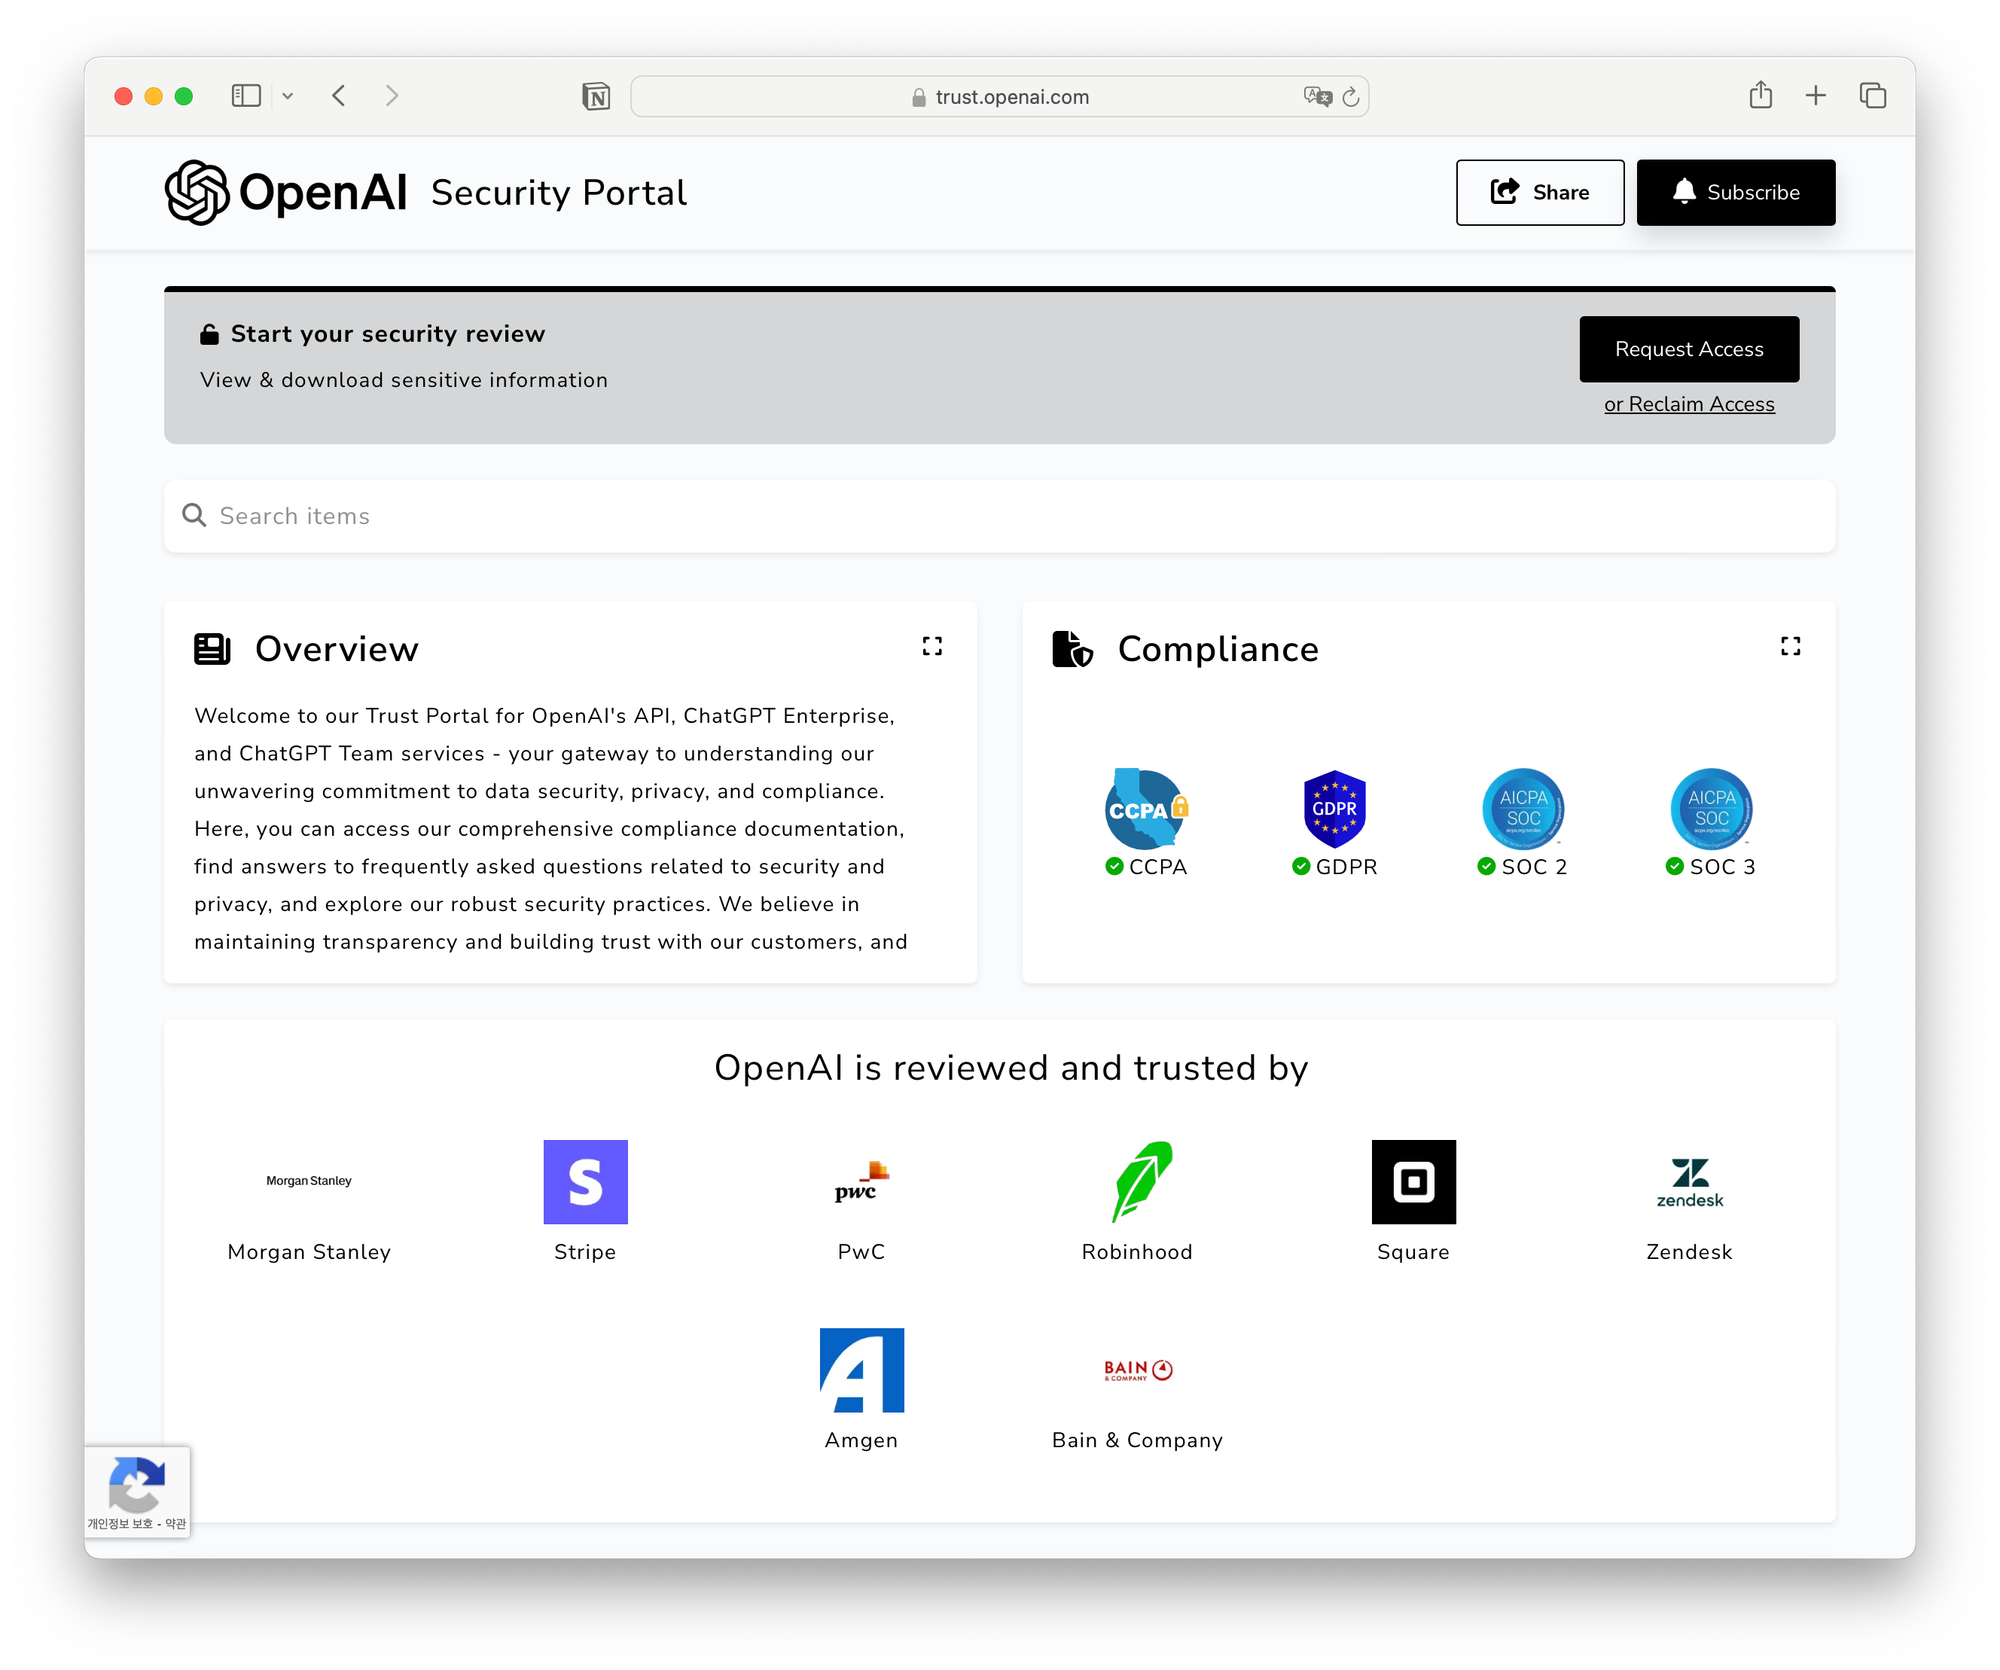 OpenAI Security Portal (https://trust.openai.com/)